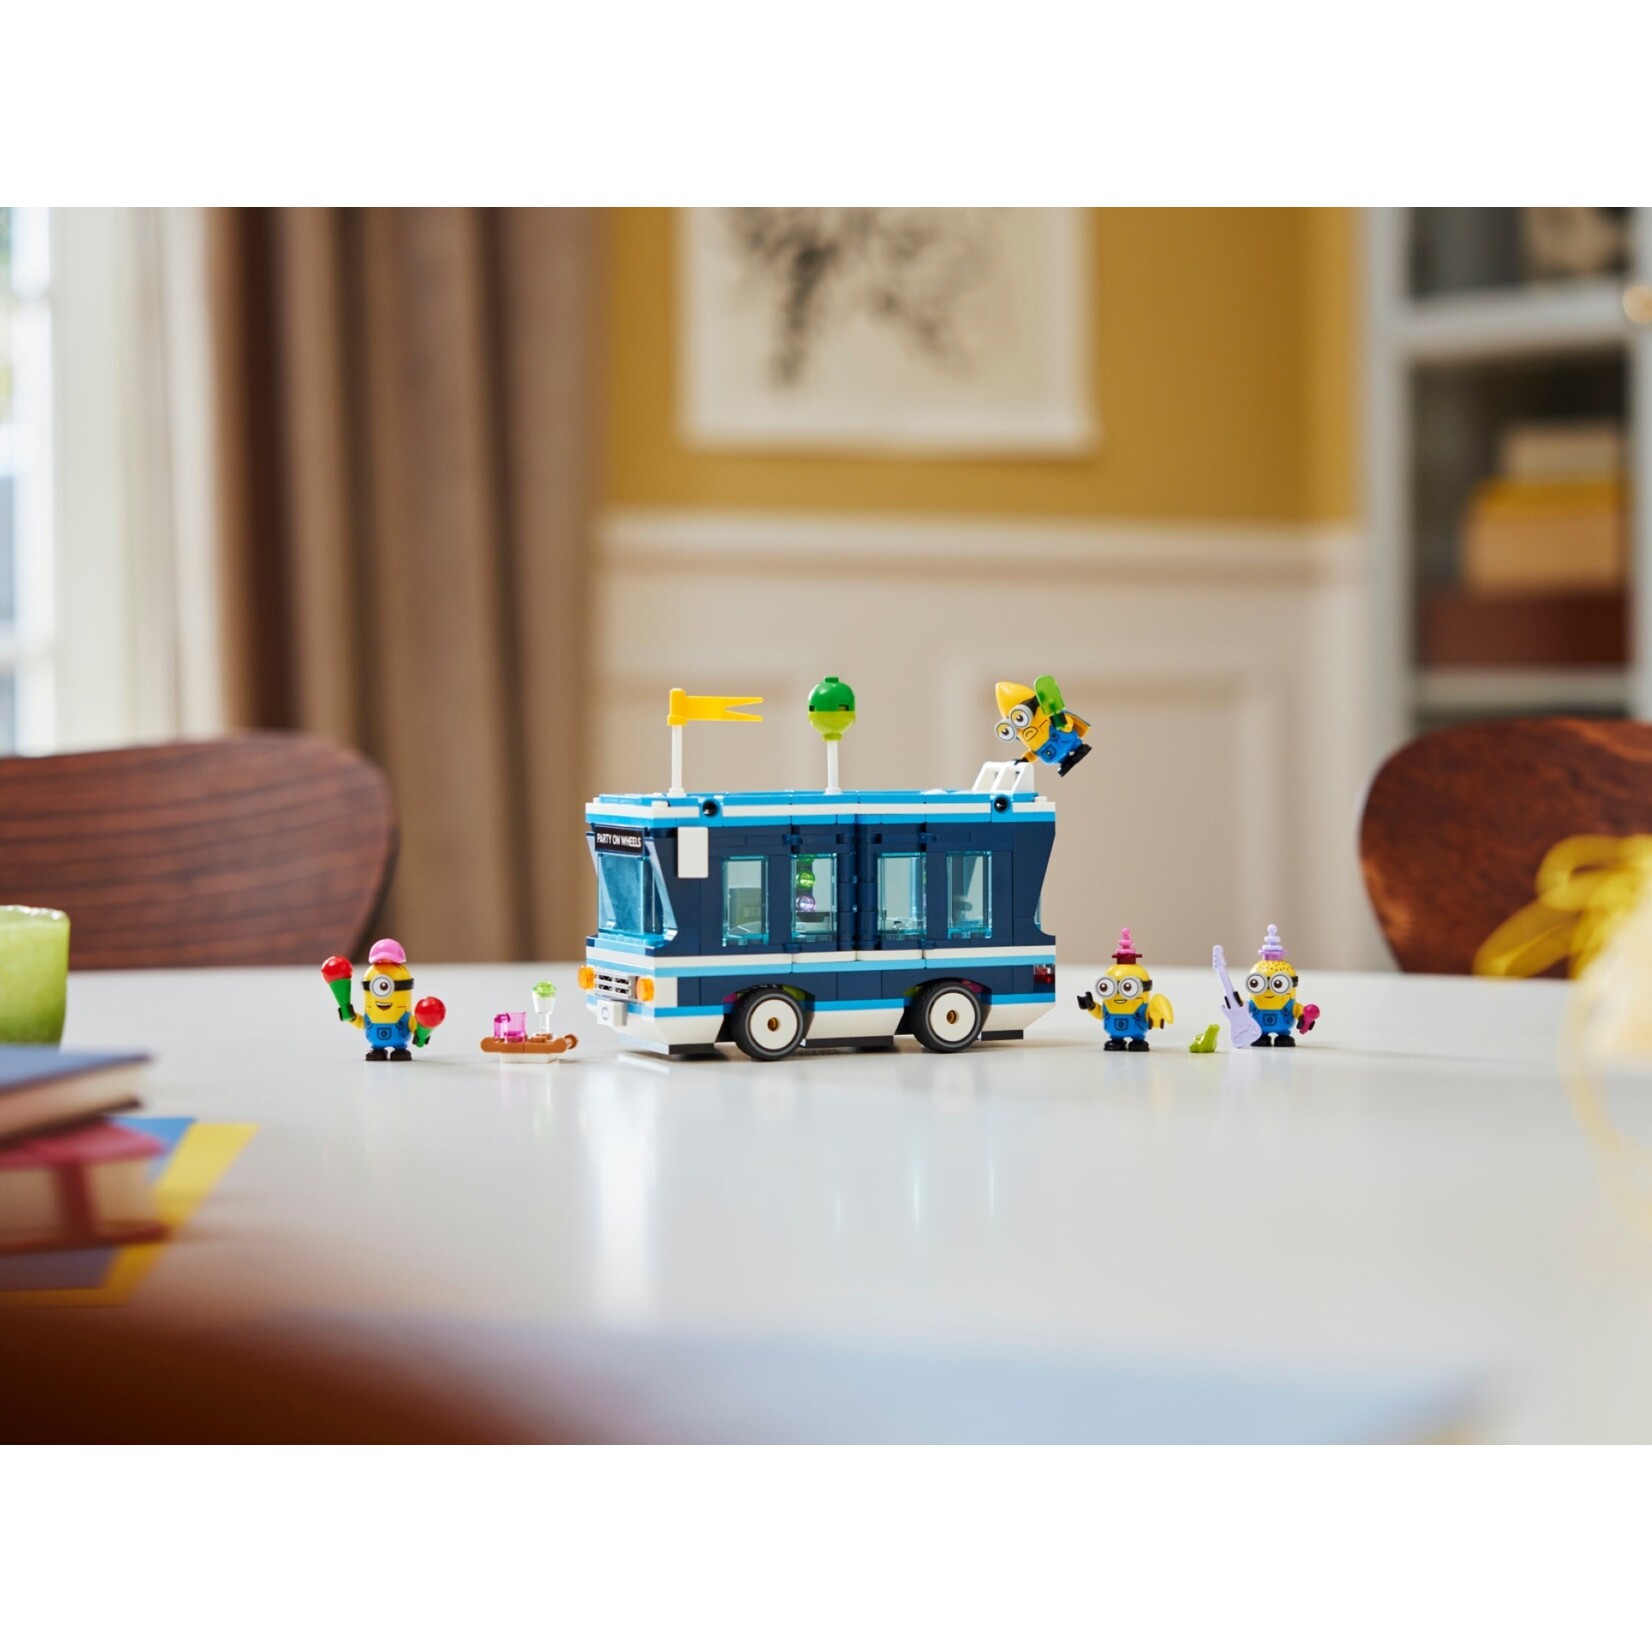 LEGO Muzikale feestbus van de Minions - 75581